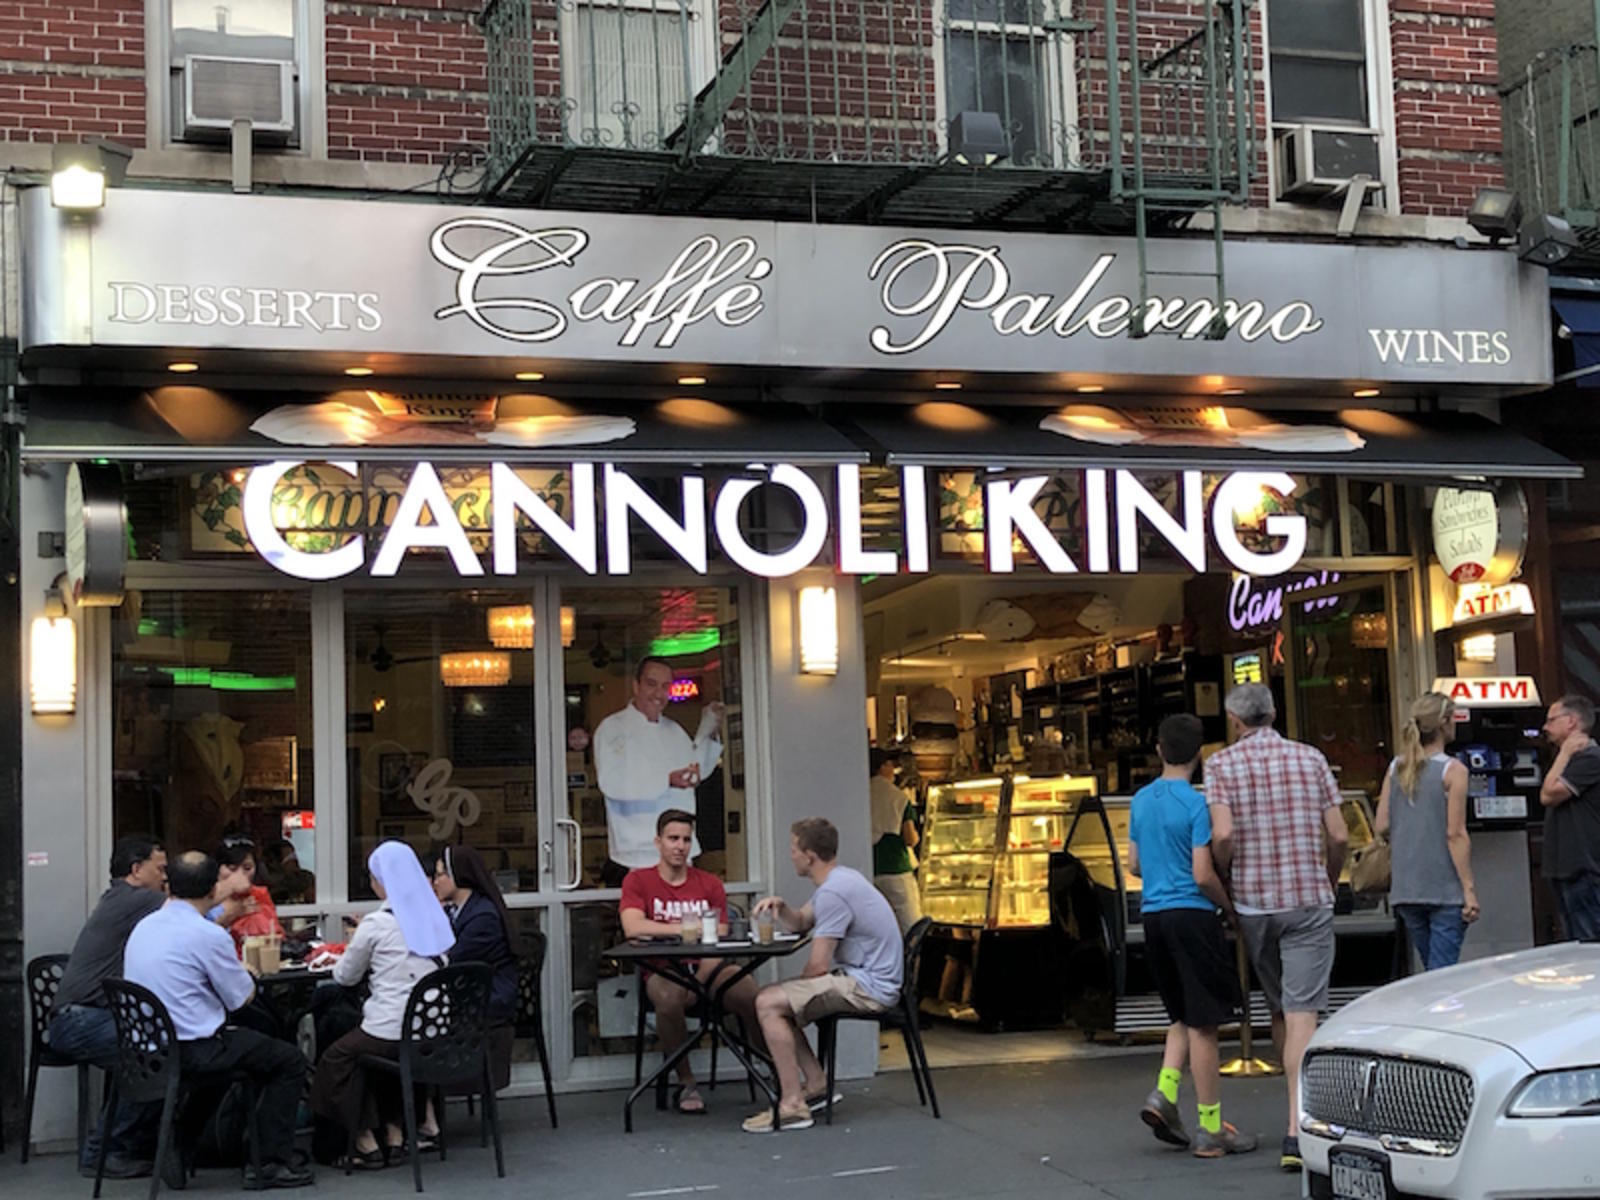 Caffe Palermo
Best Cannoli NYC